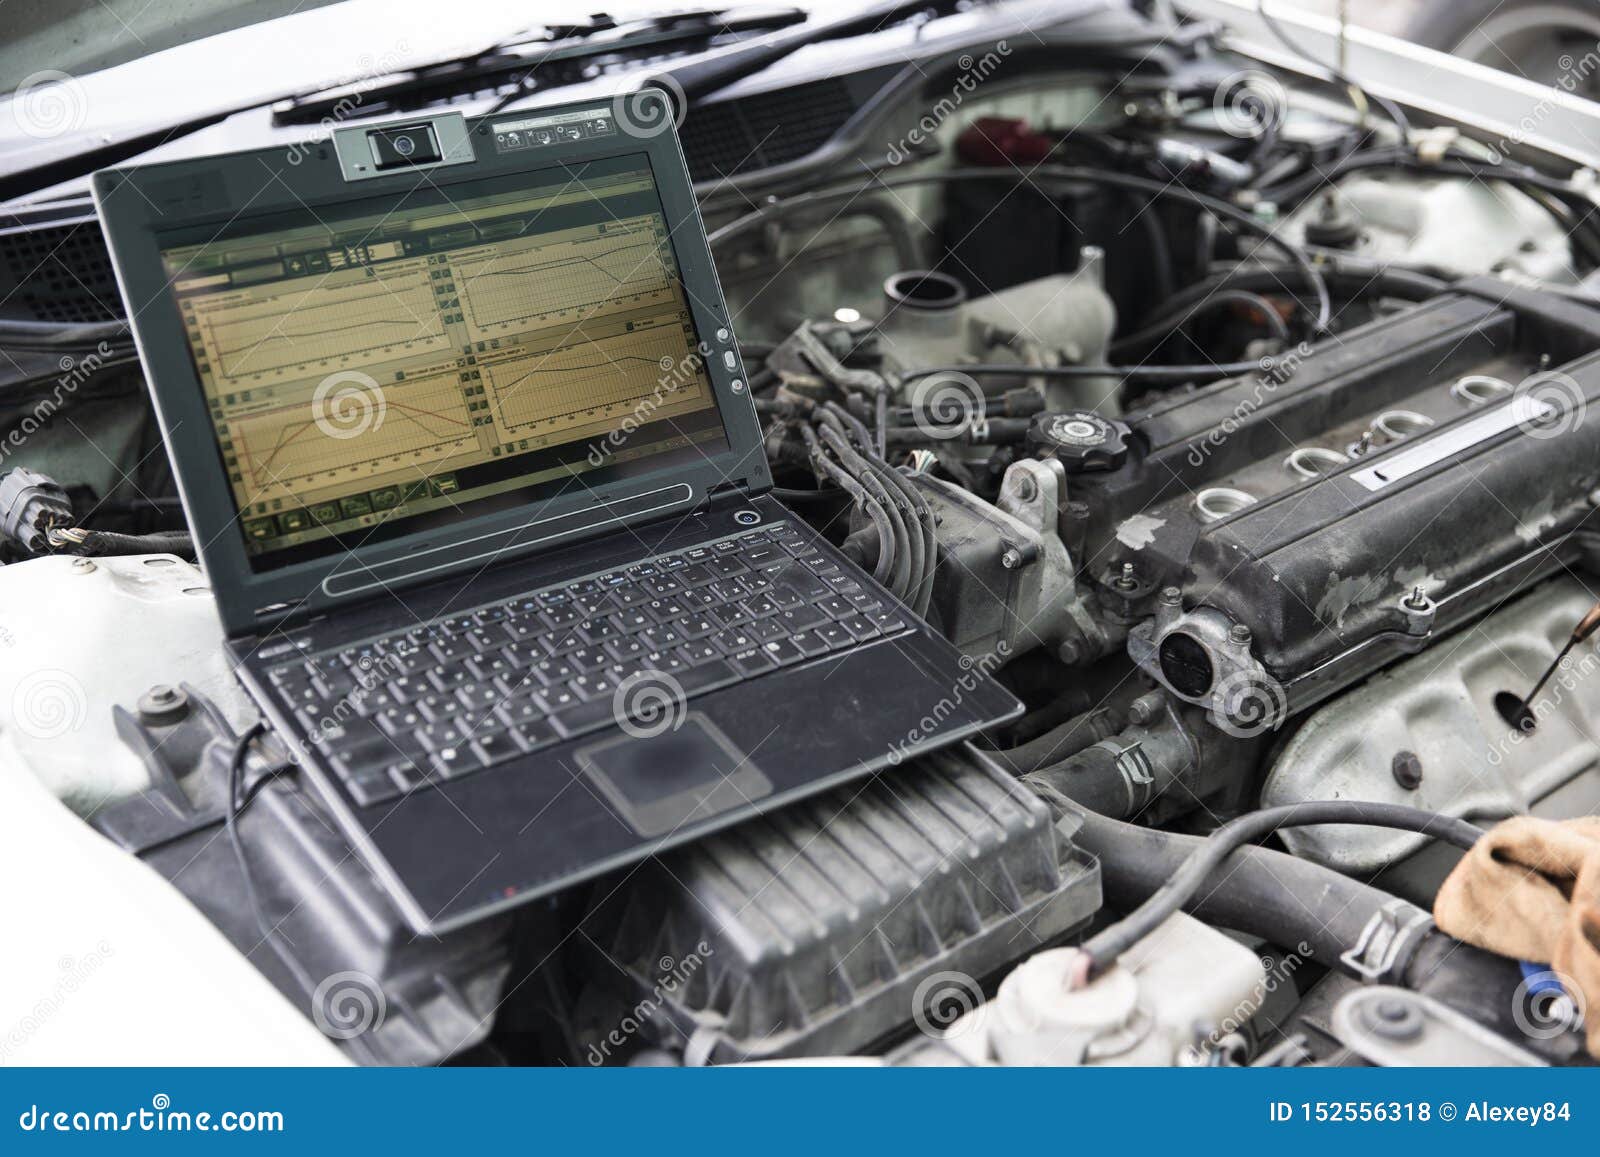 Vehicle diagnostics laptop stock photo